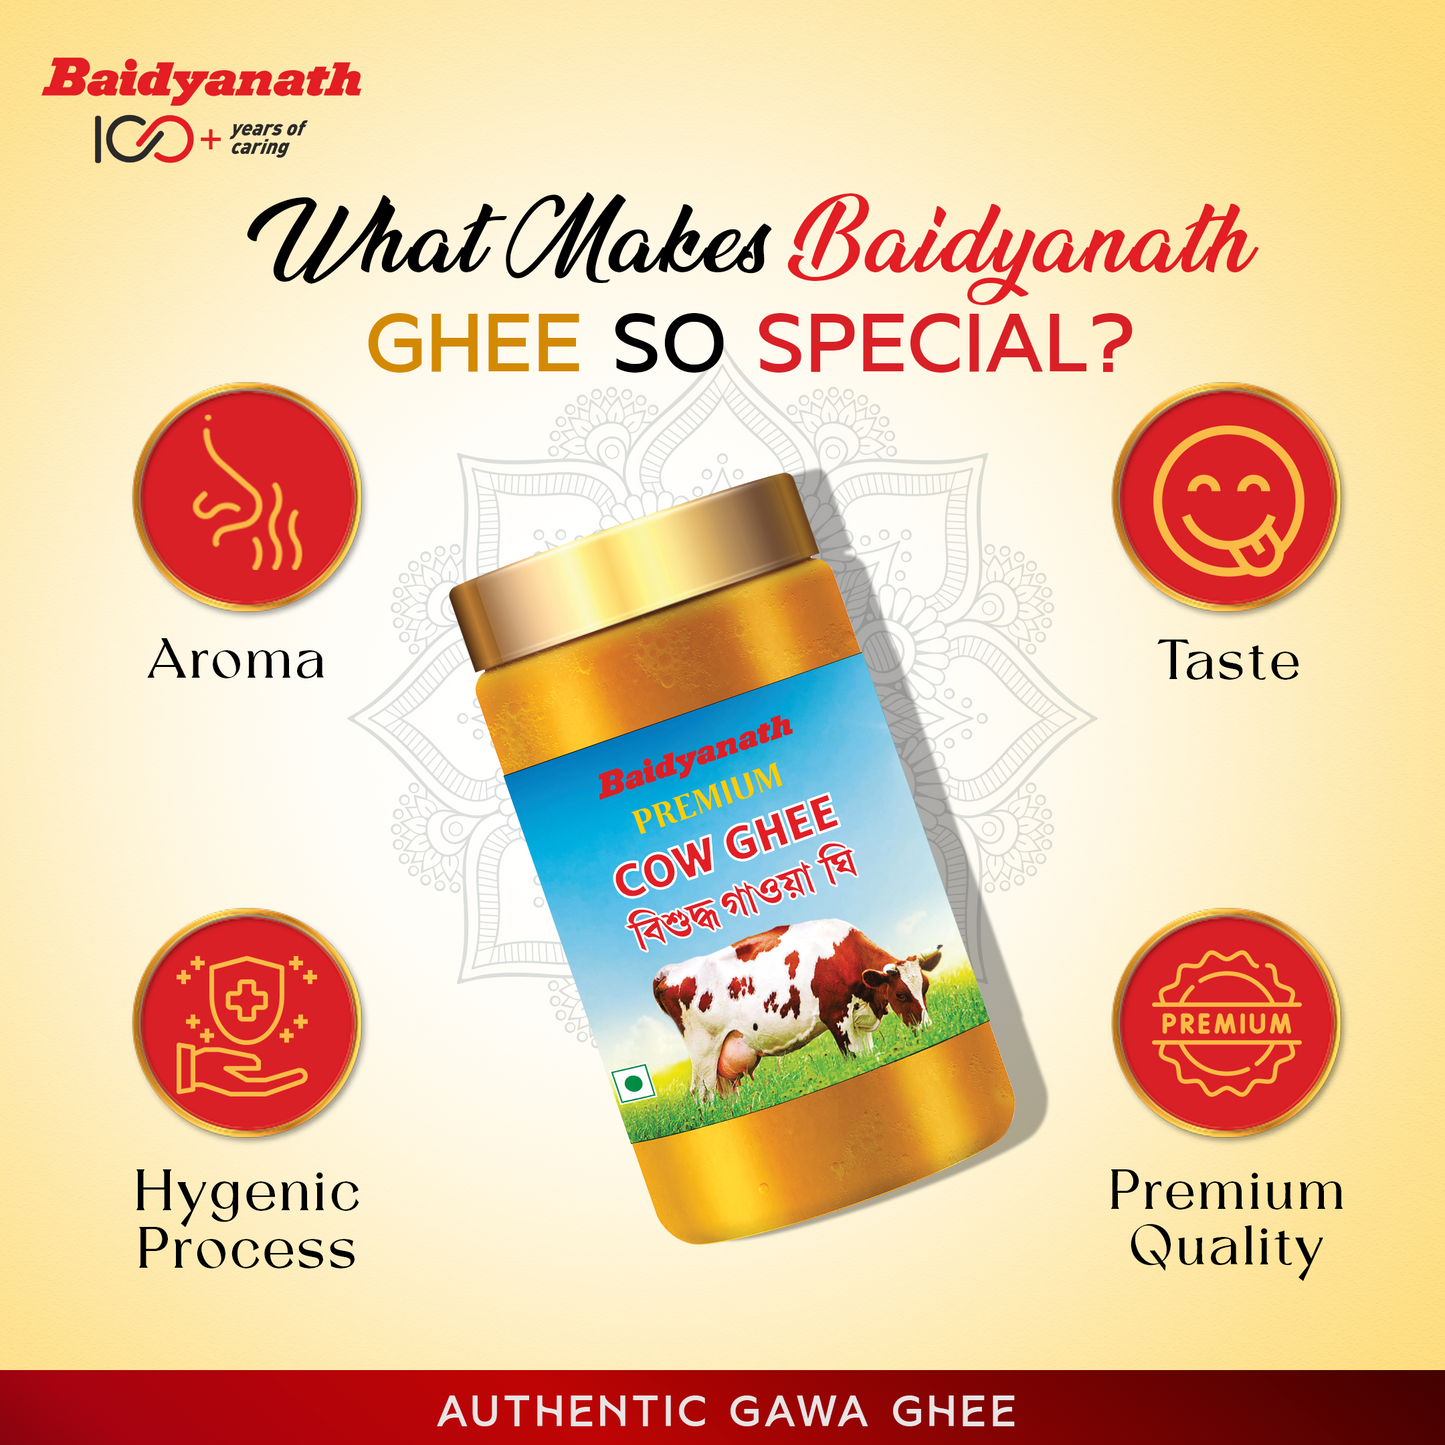 Baidyanath Premium Bengali Cow Ghee